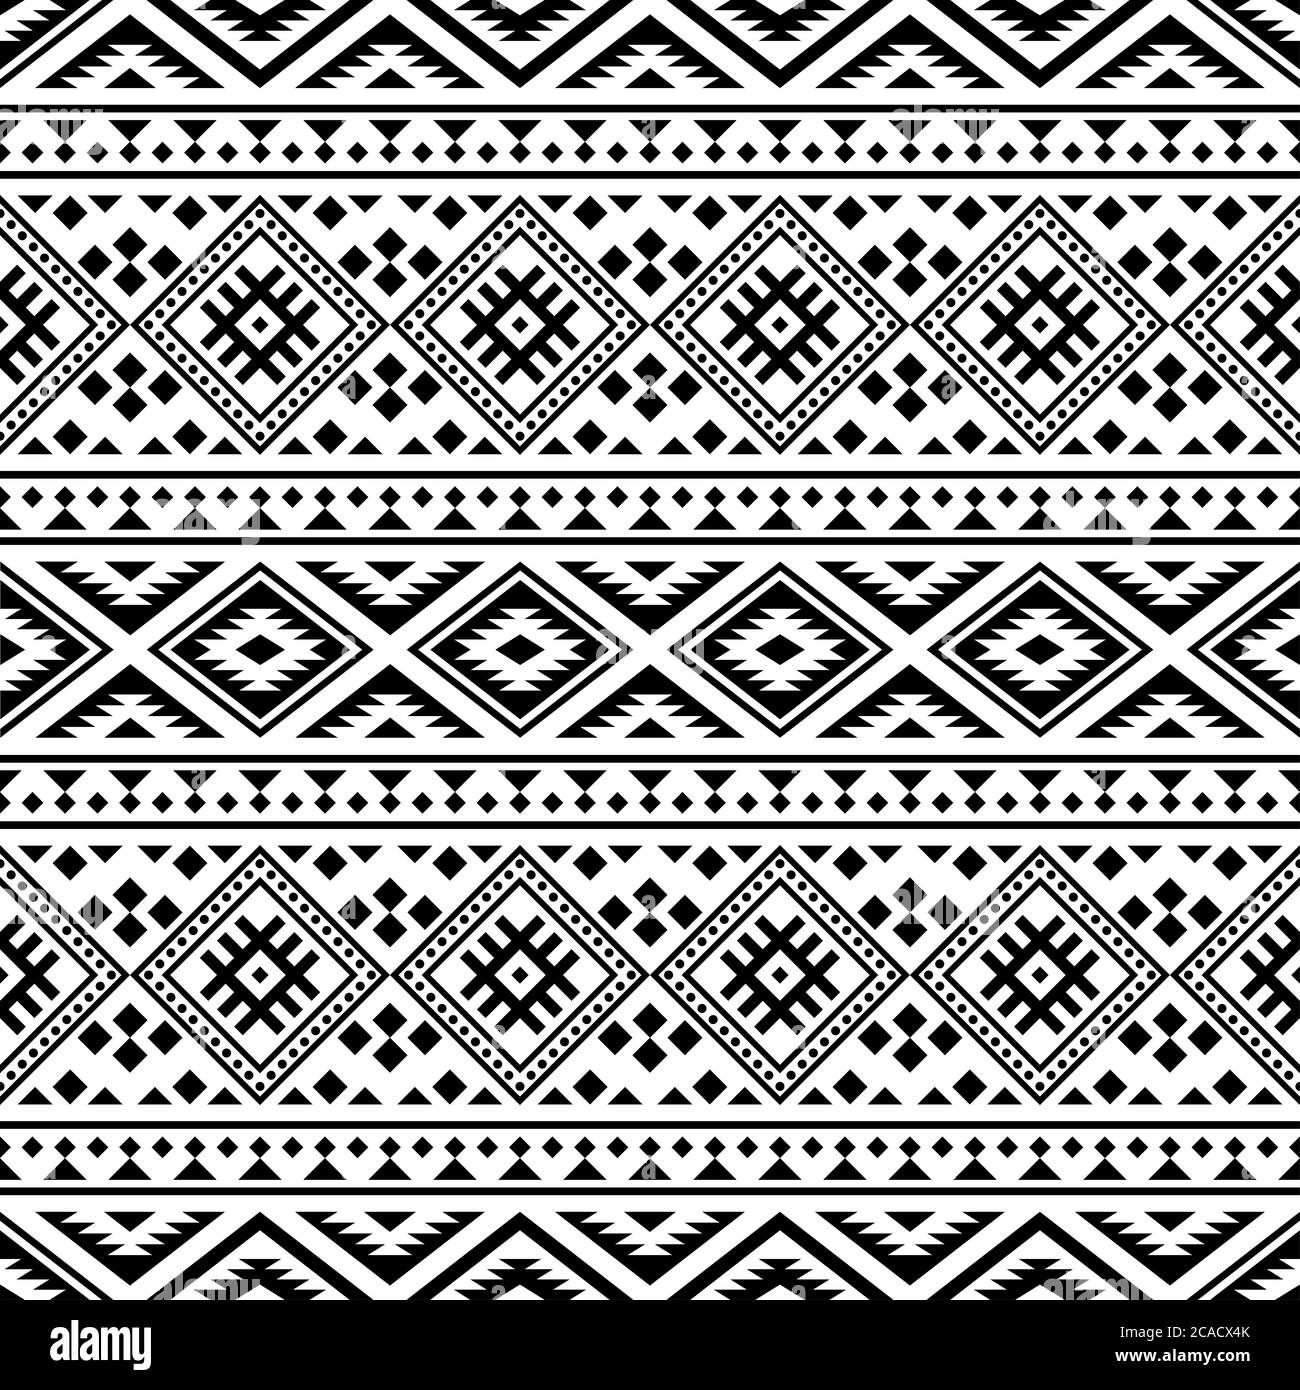 Ikat Ethnic Aztec Pattern Illustration Design in black and white color ...